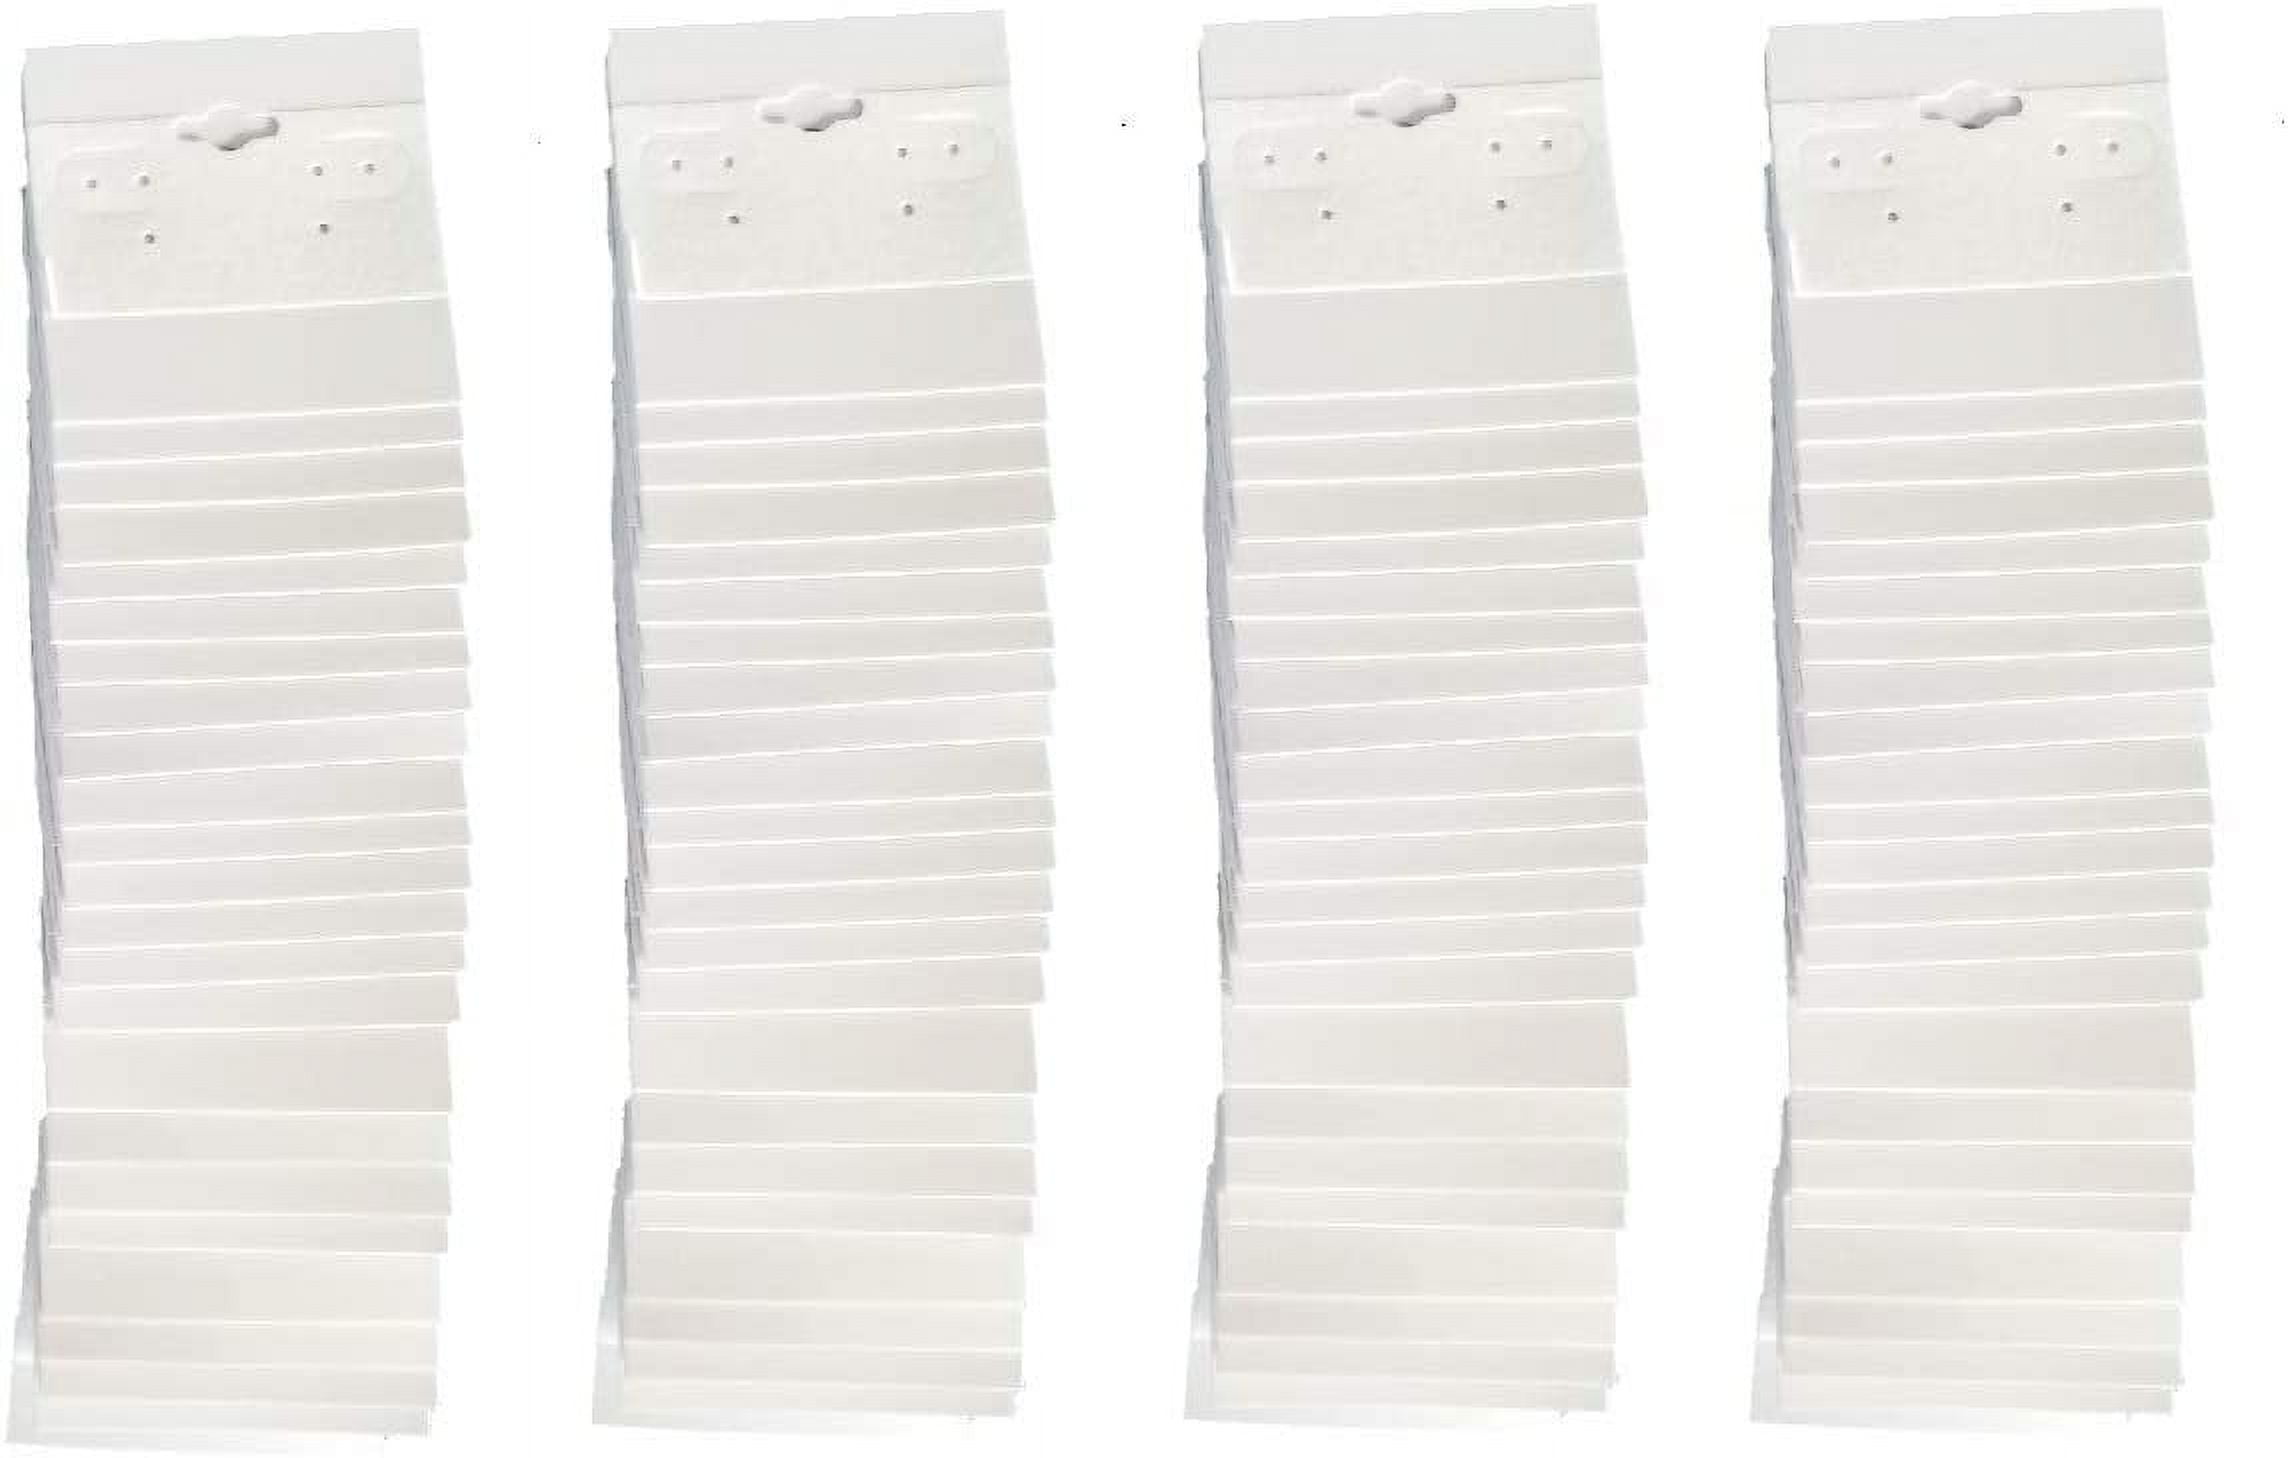 Earring Cards - White - ULINE - 2 Packs of 100 - S-20873W